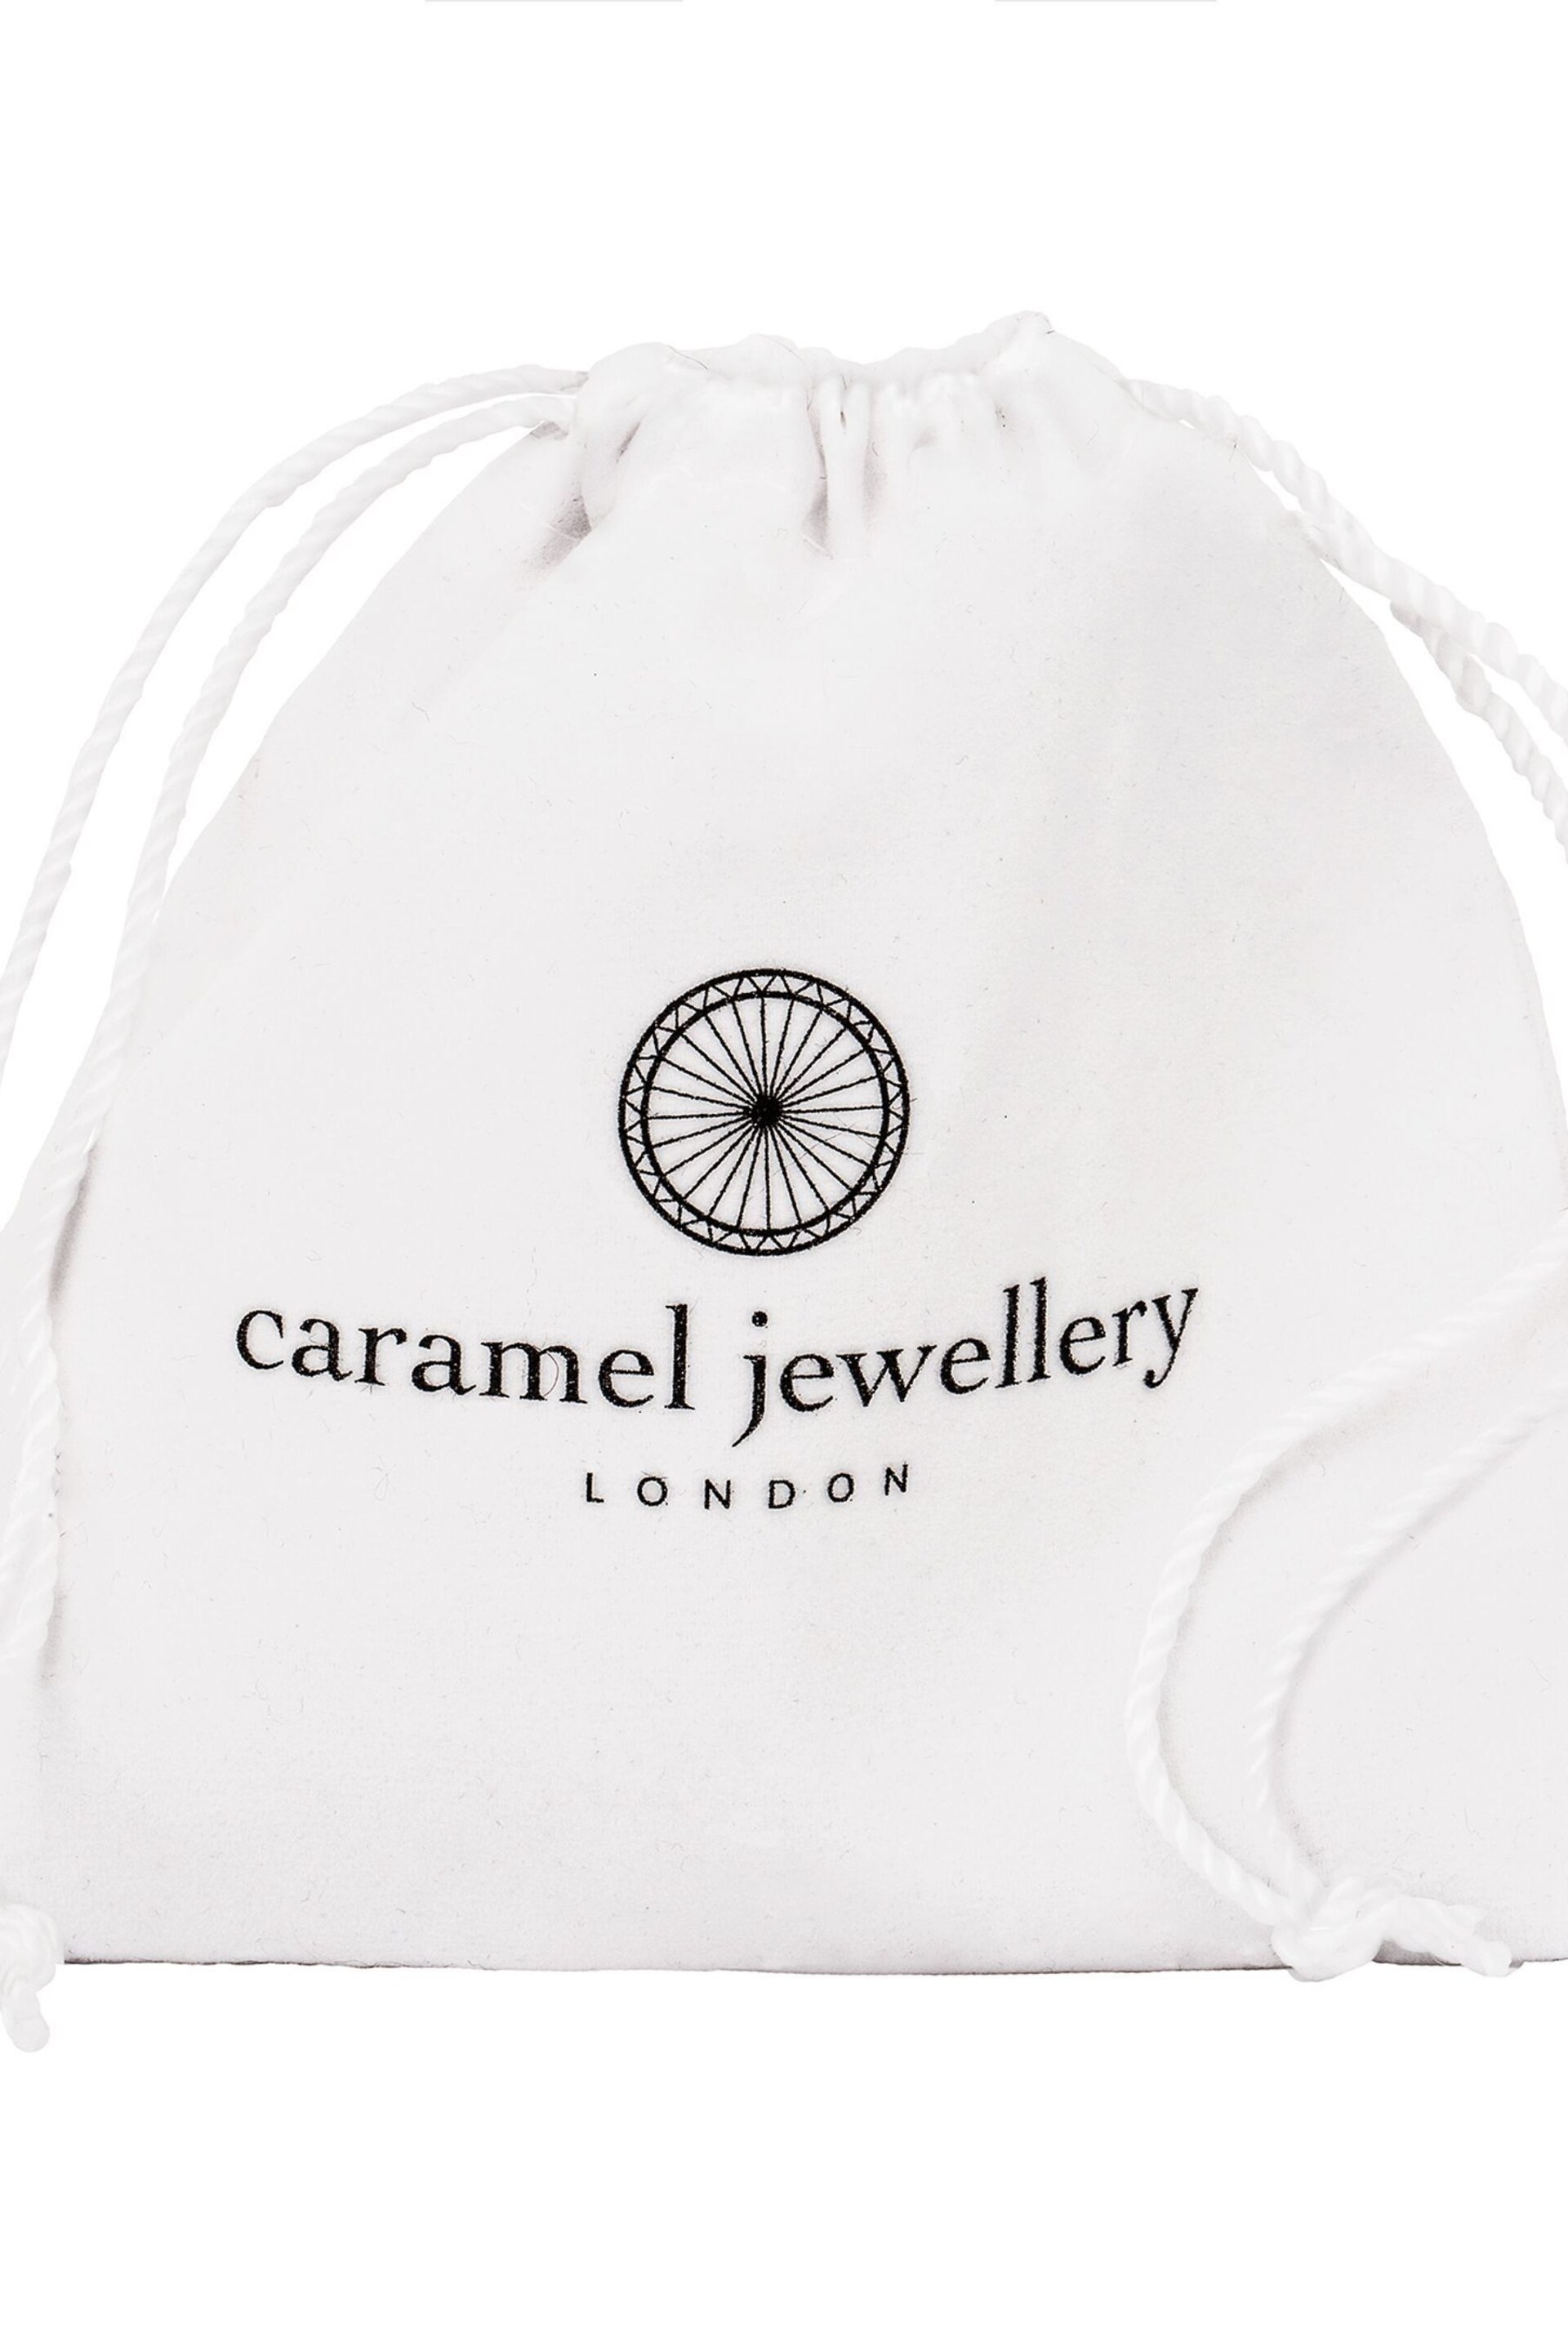 Caramel Jewellery London Silver Tone Constellation White Quartz Layered Necklace - Image 6 of 6